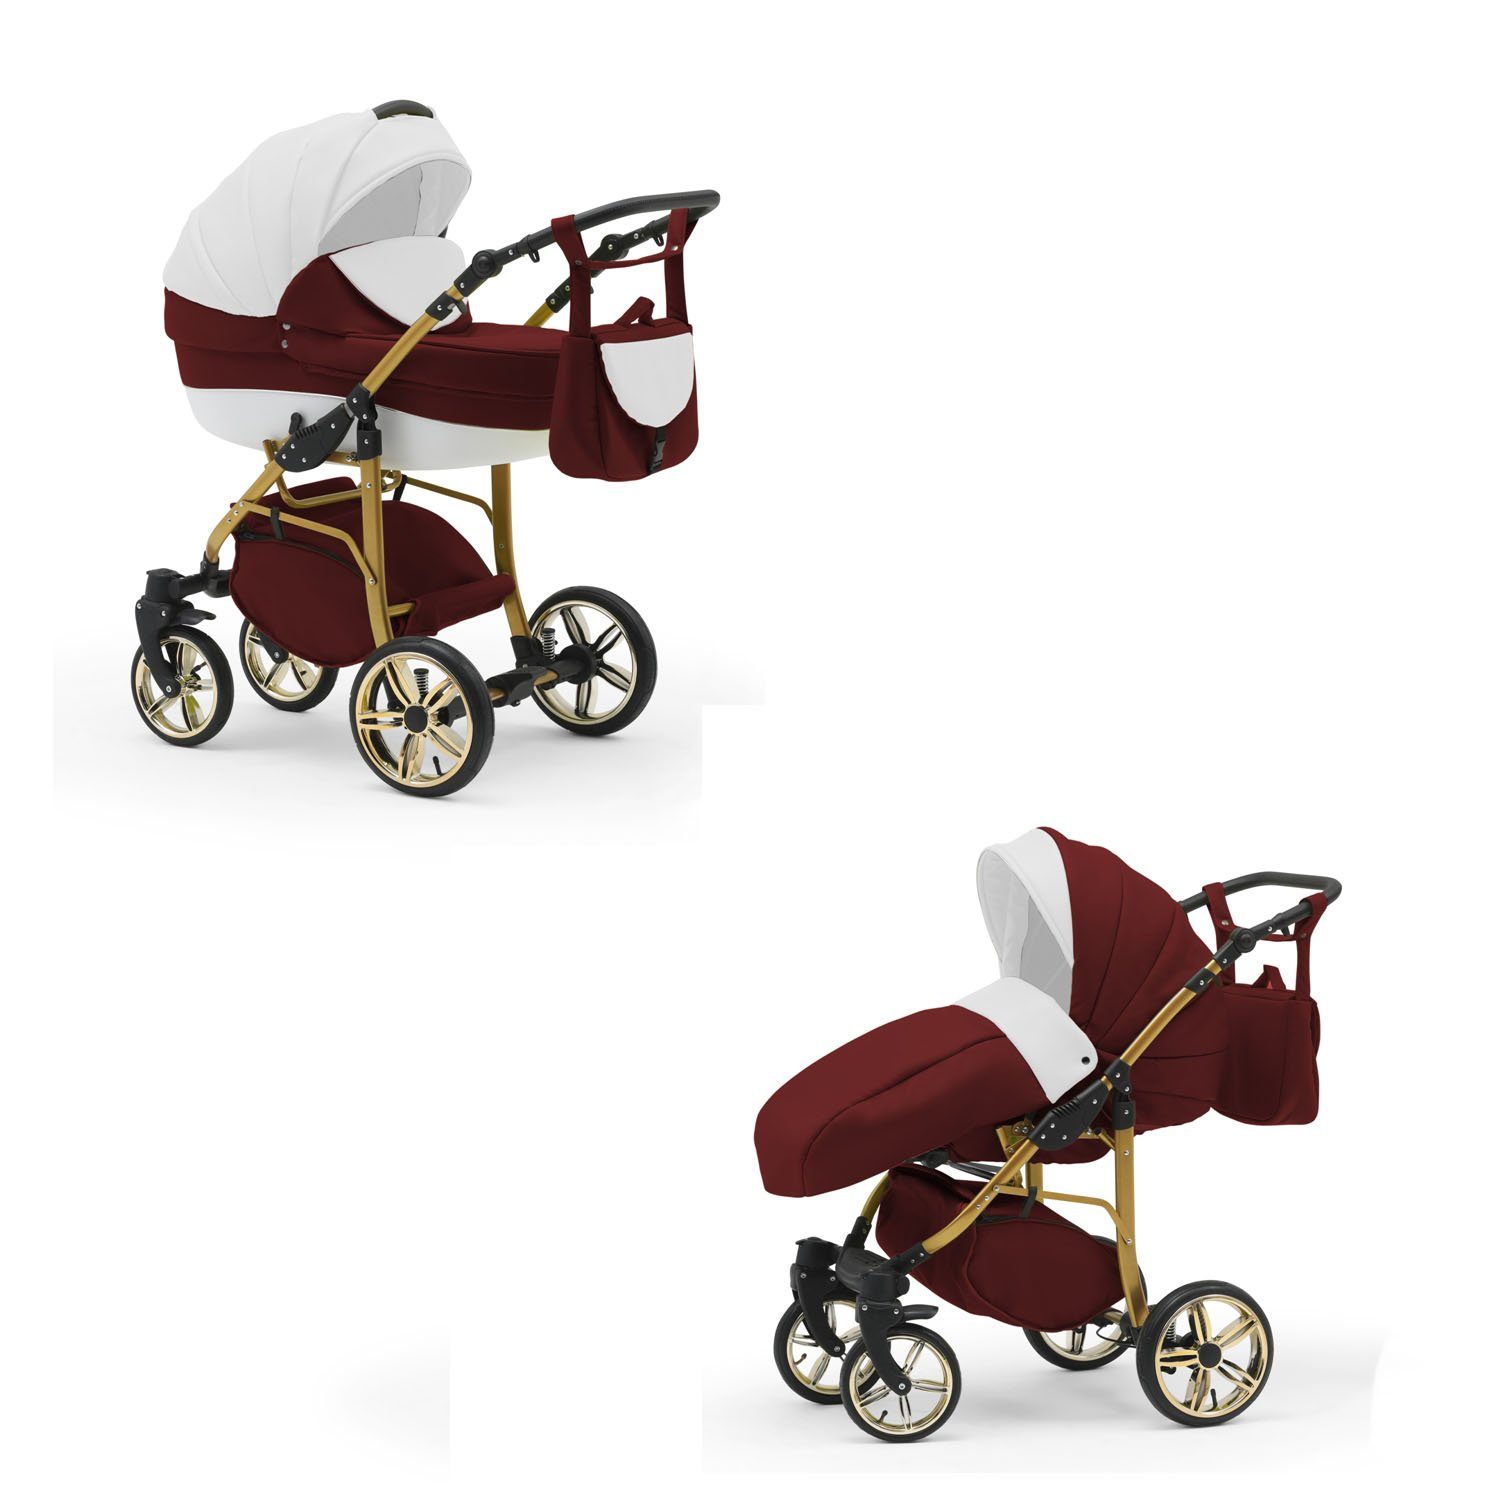 1 Cosmo - ECO 46 in in Teile Weiß-Bordeaux-Weiß Farben Gold babies-on-wheels - Kinderwagen-Set Kombi-Kinderwagen 13 2